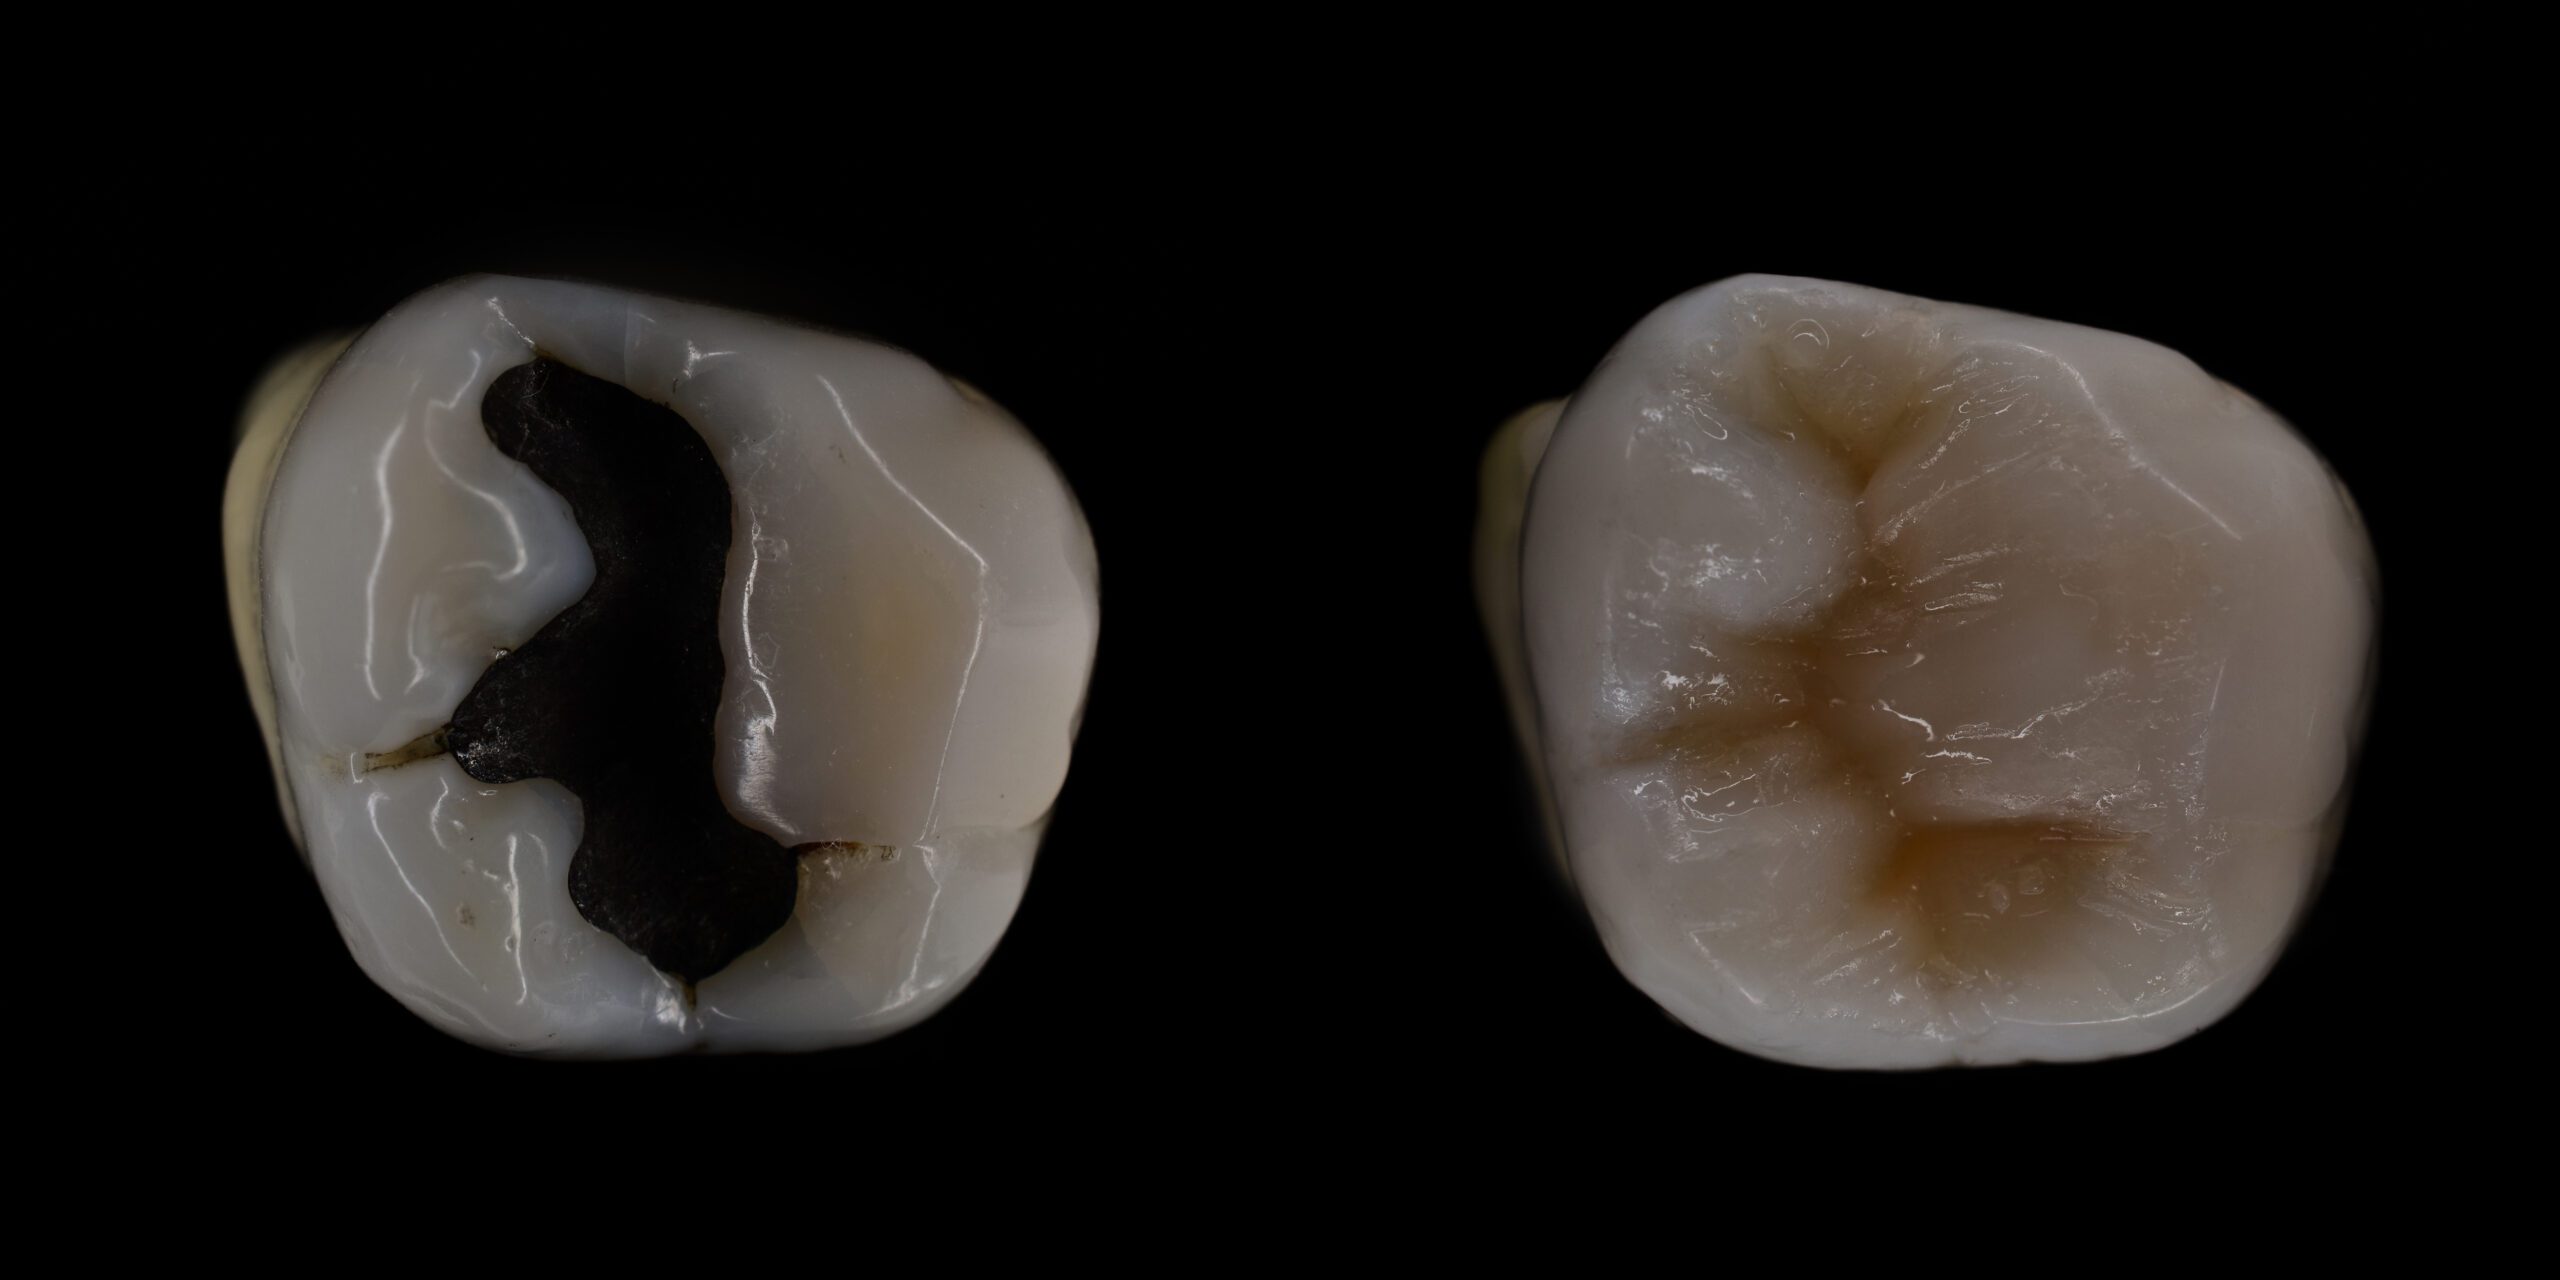 amalgam to composite before and after Dental Fillings Yerba Buena Dentistry. Dr. Jiahua Zhu Dr. Semi Lim Dr. Varghah Lotfi Dr. Amrit K Sethi. General, Cosmetic, Restorative, Preventative Family Dentistry Dentist CA 94111